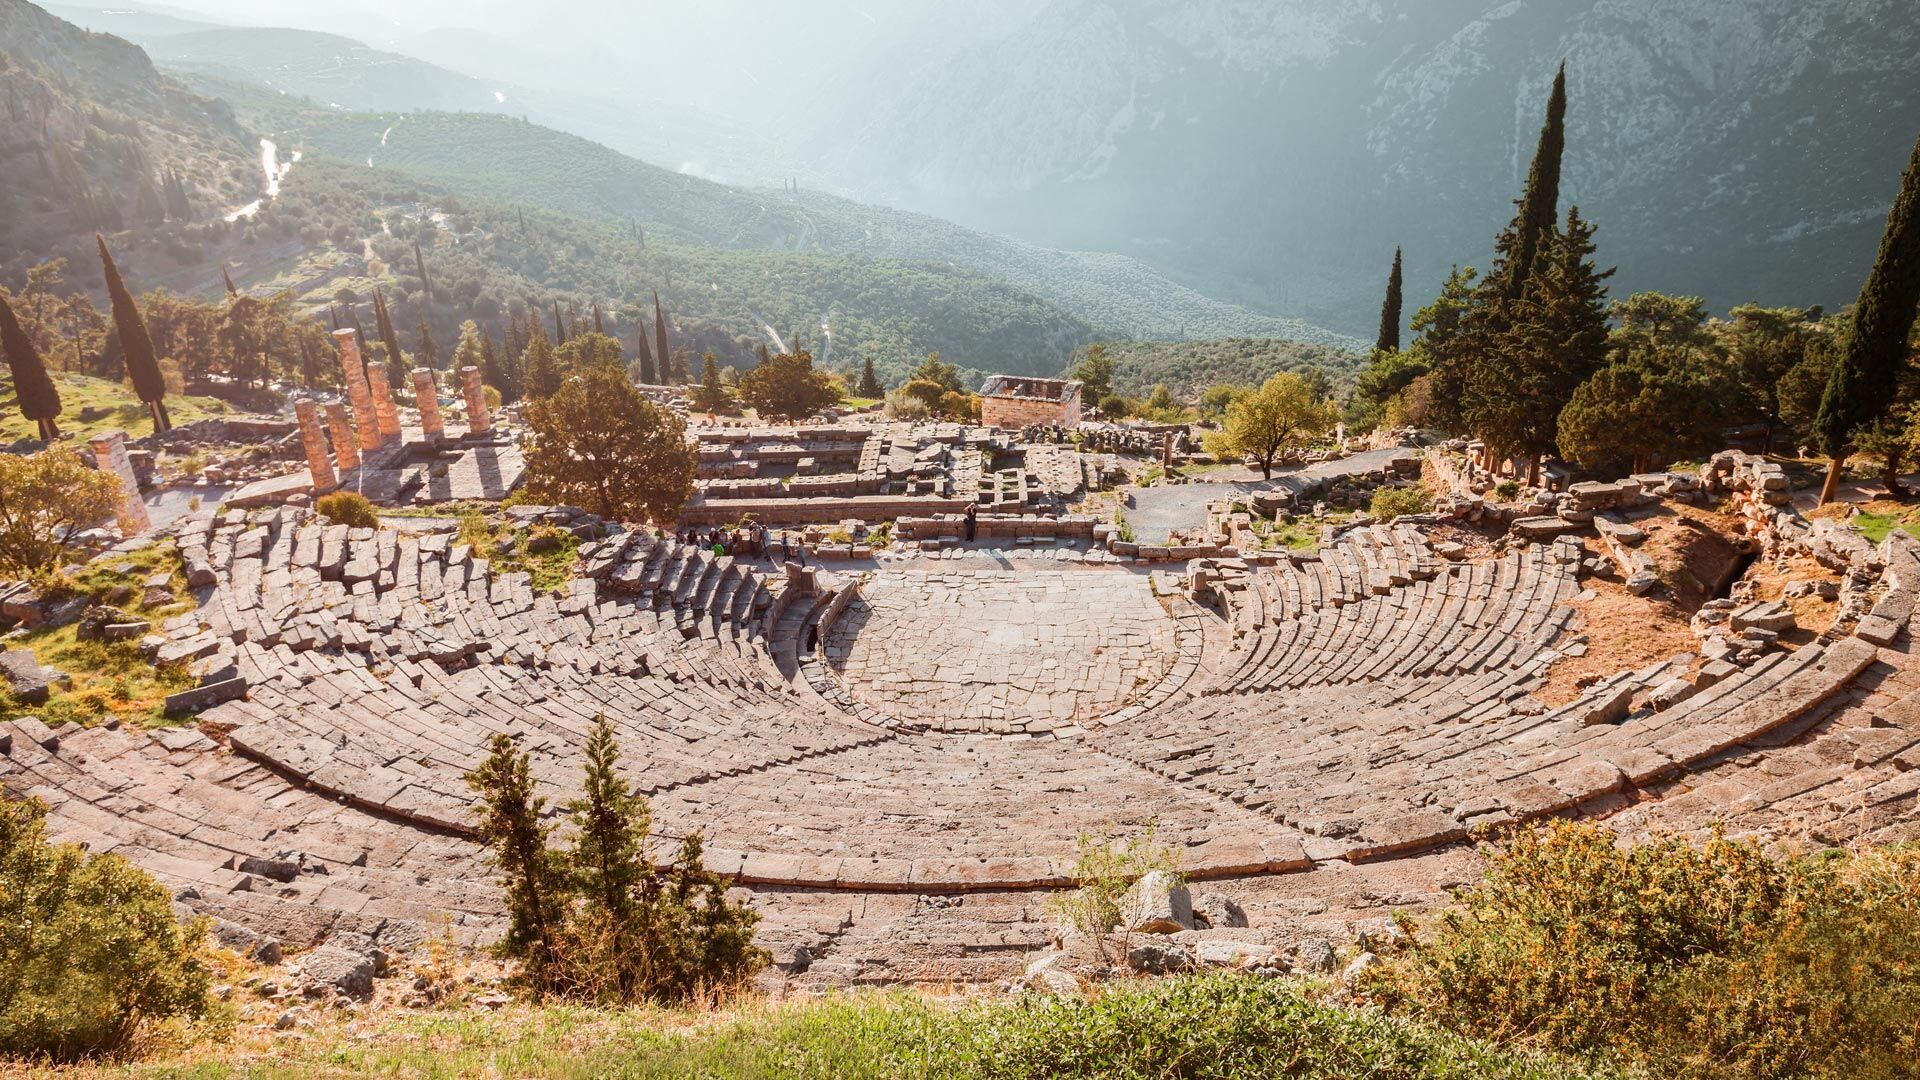 Eπίσκεψη στον αρχαιολογικό χώρο των Δελφών | Discover Greece